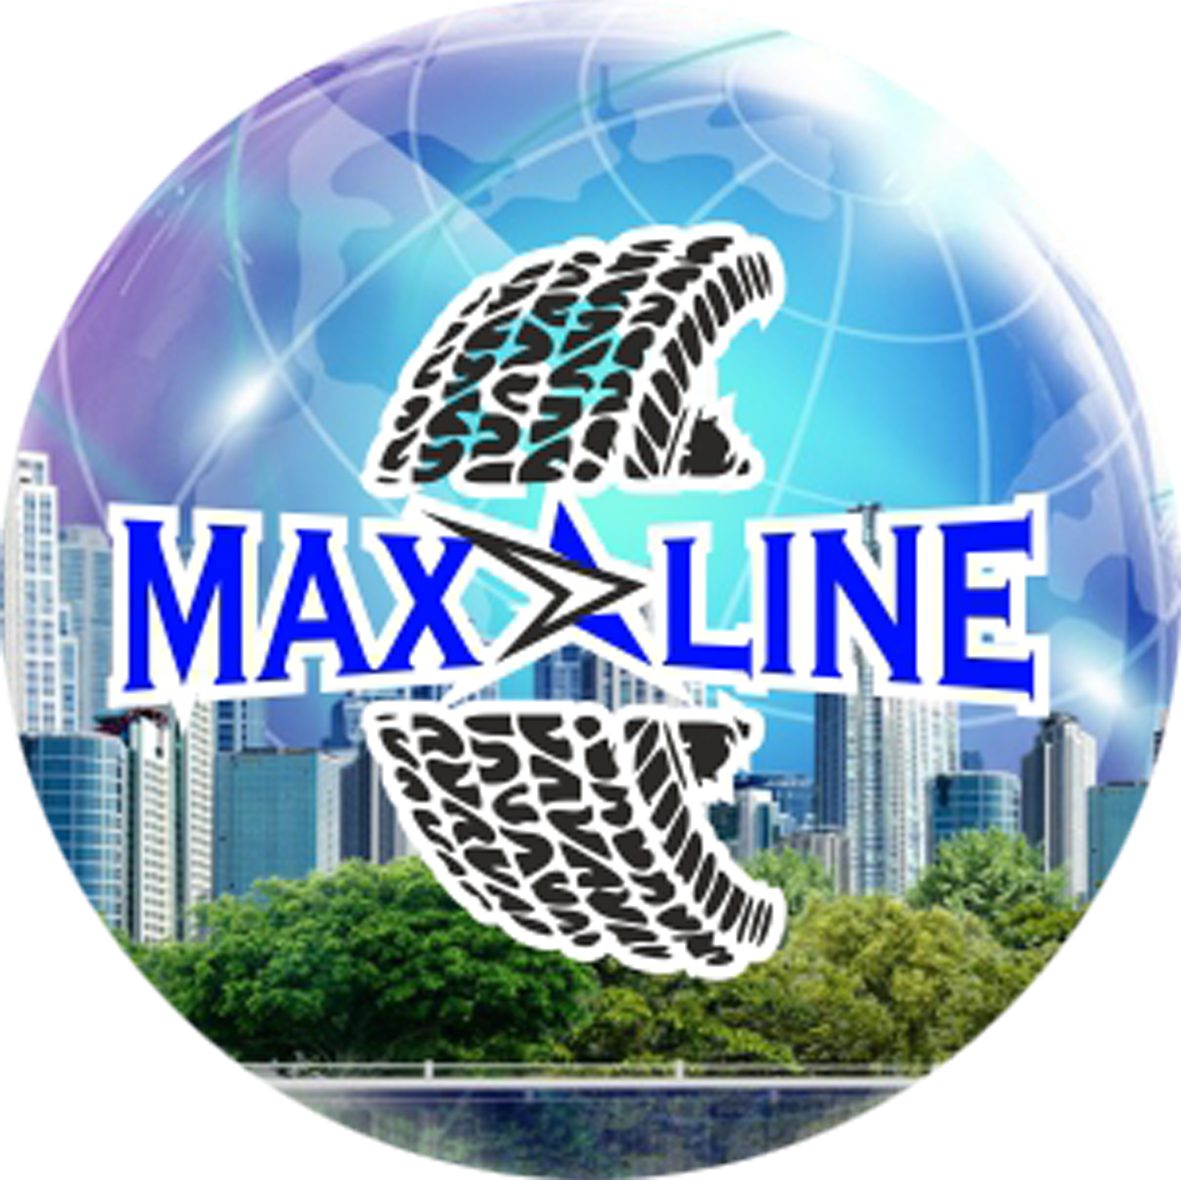 Max companies. MAXLINE лого. Компания Max. Эмблема MAXLINE professional. Лого MAXLINE Лондон.